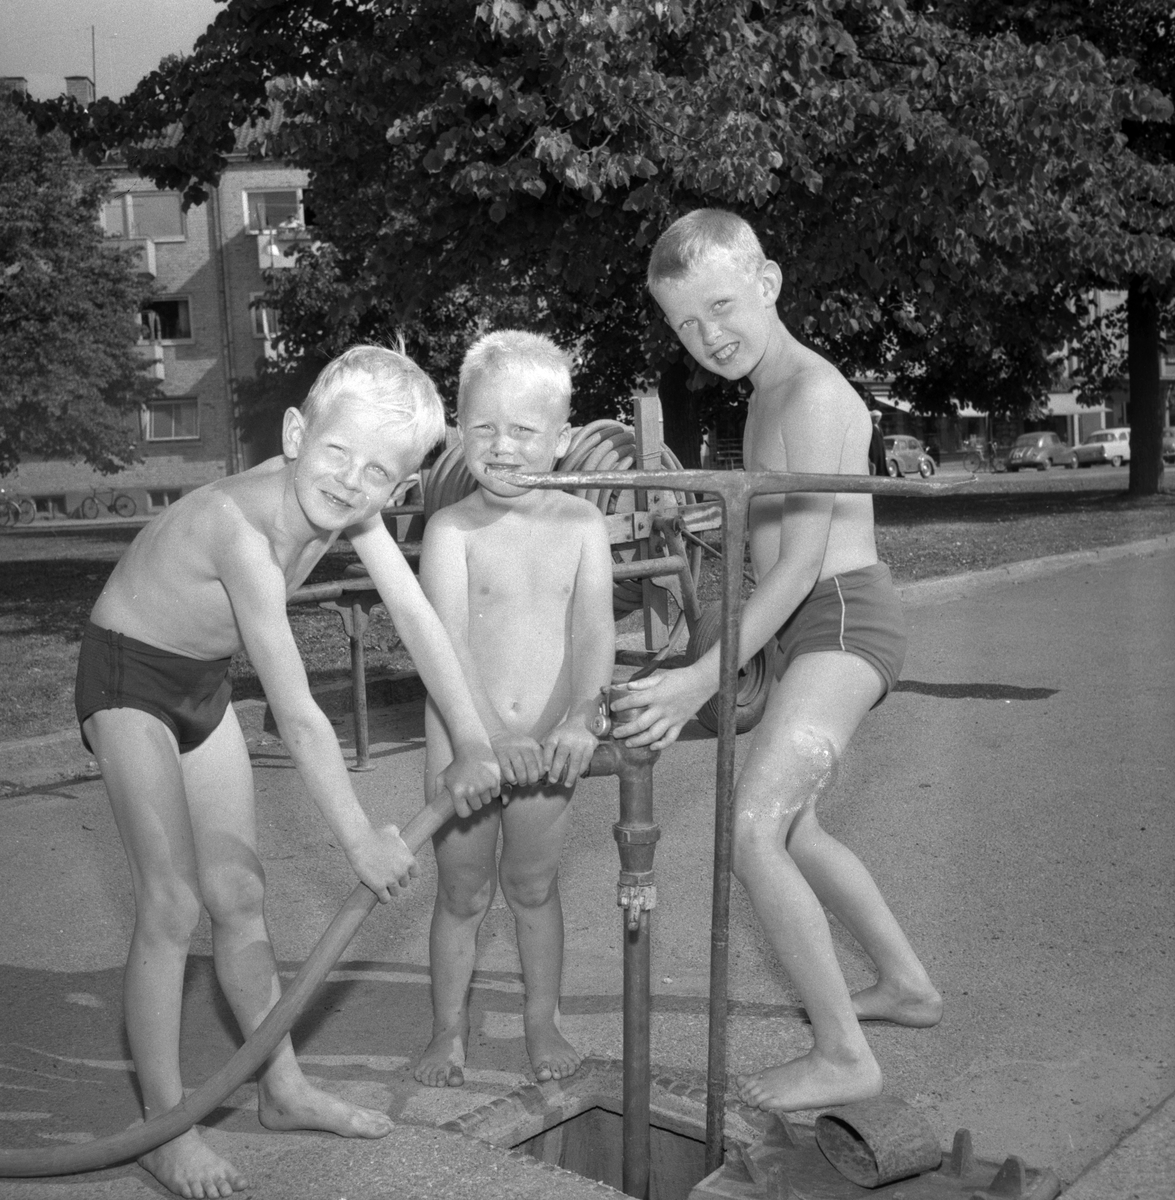 Badreportage i Hästhagen. 
29 juni 1959.